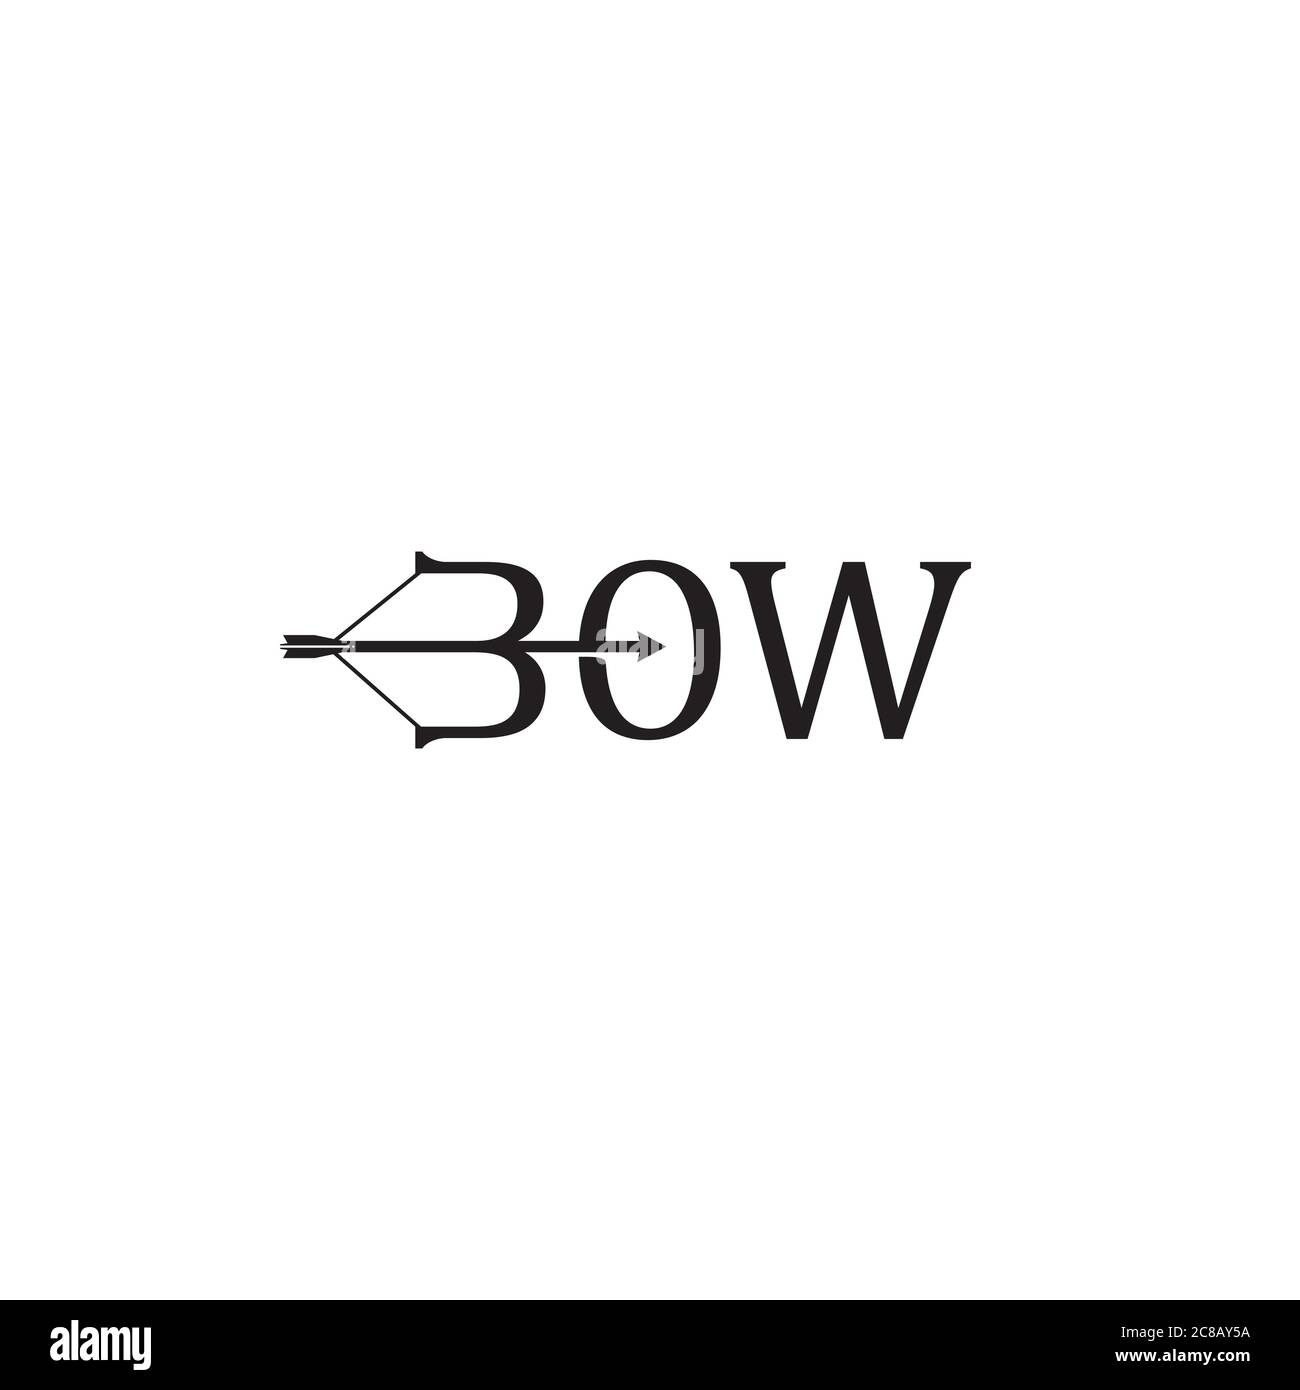 a simple Bow wordmark logo design Stock Vector